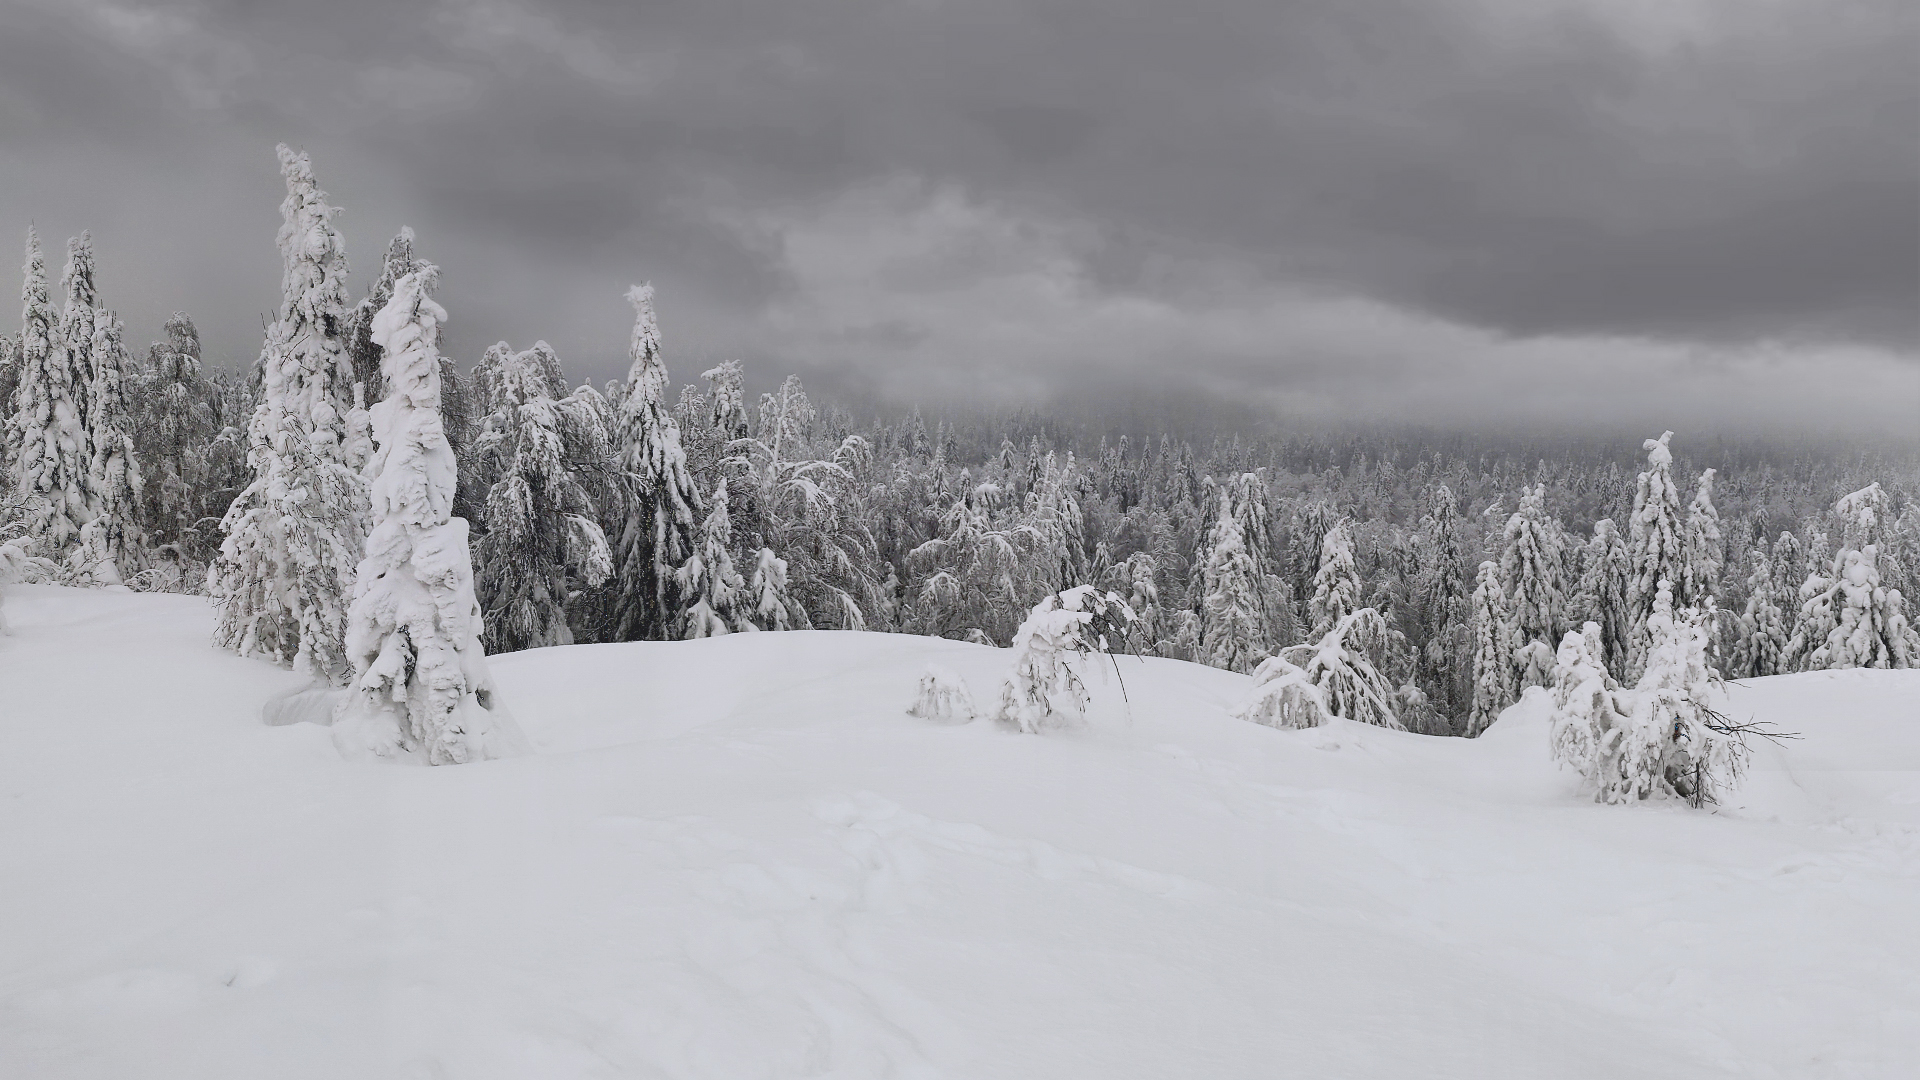 General 1920x1080 snow winter sky trees nature landscape monochrome